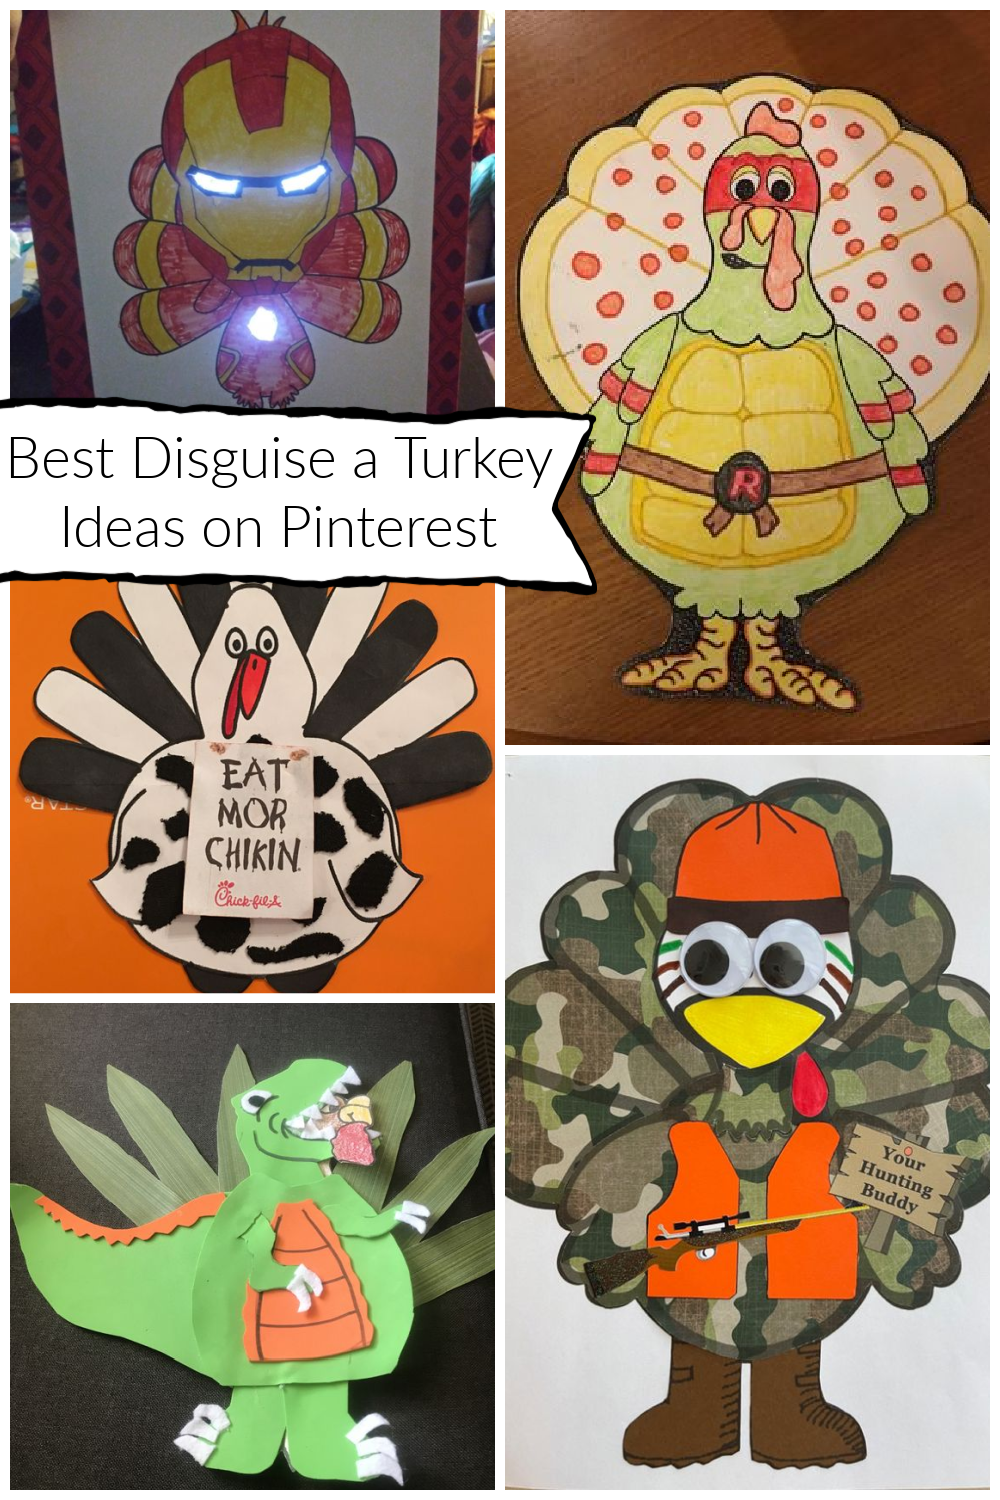 Best Disguise a Turkey Ideas on Pinterest